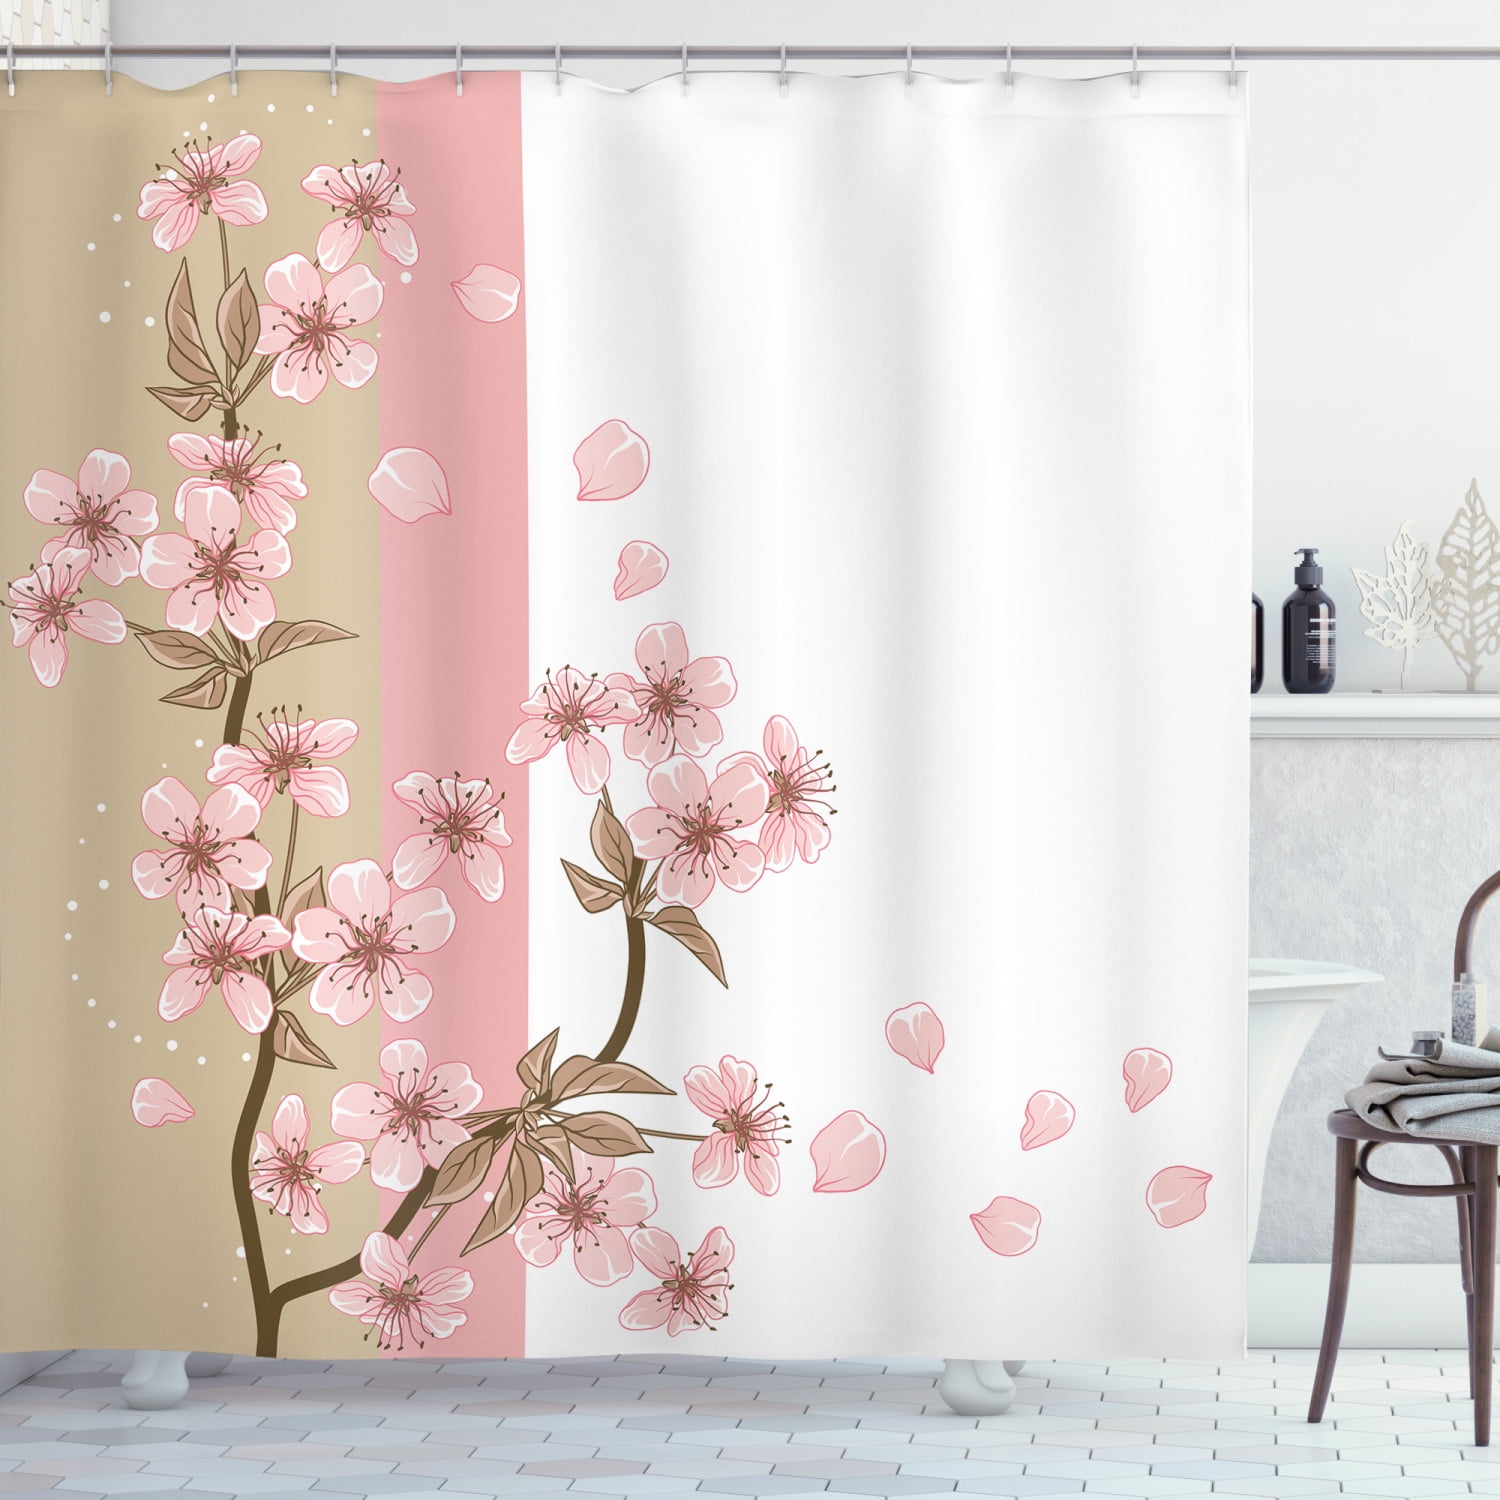 4 Pcs Japanese Cherry Blossom Shower Curtain Sets Non-Slip Waterproof Durable 